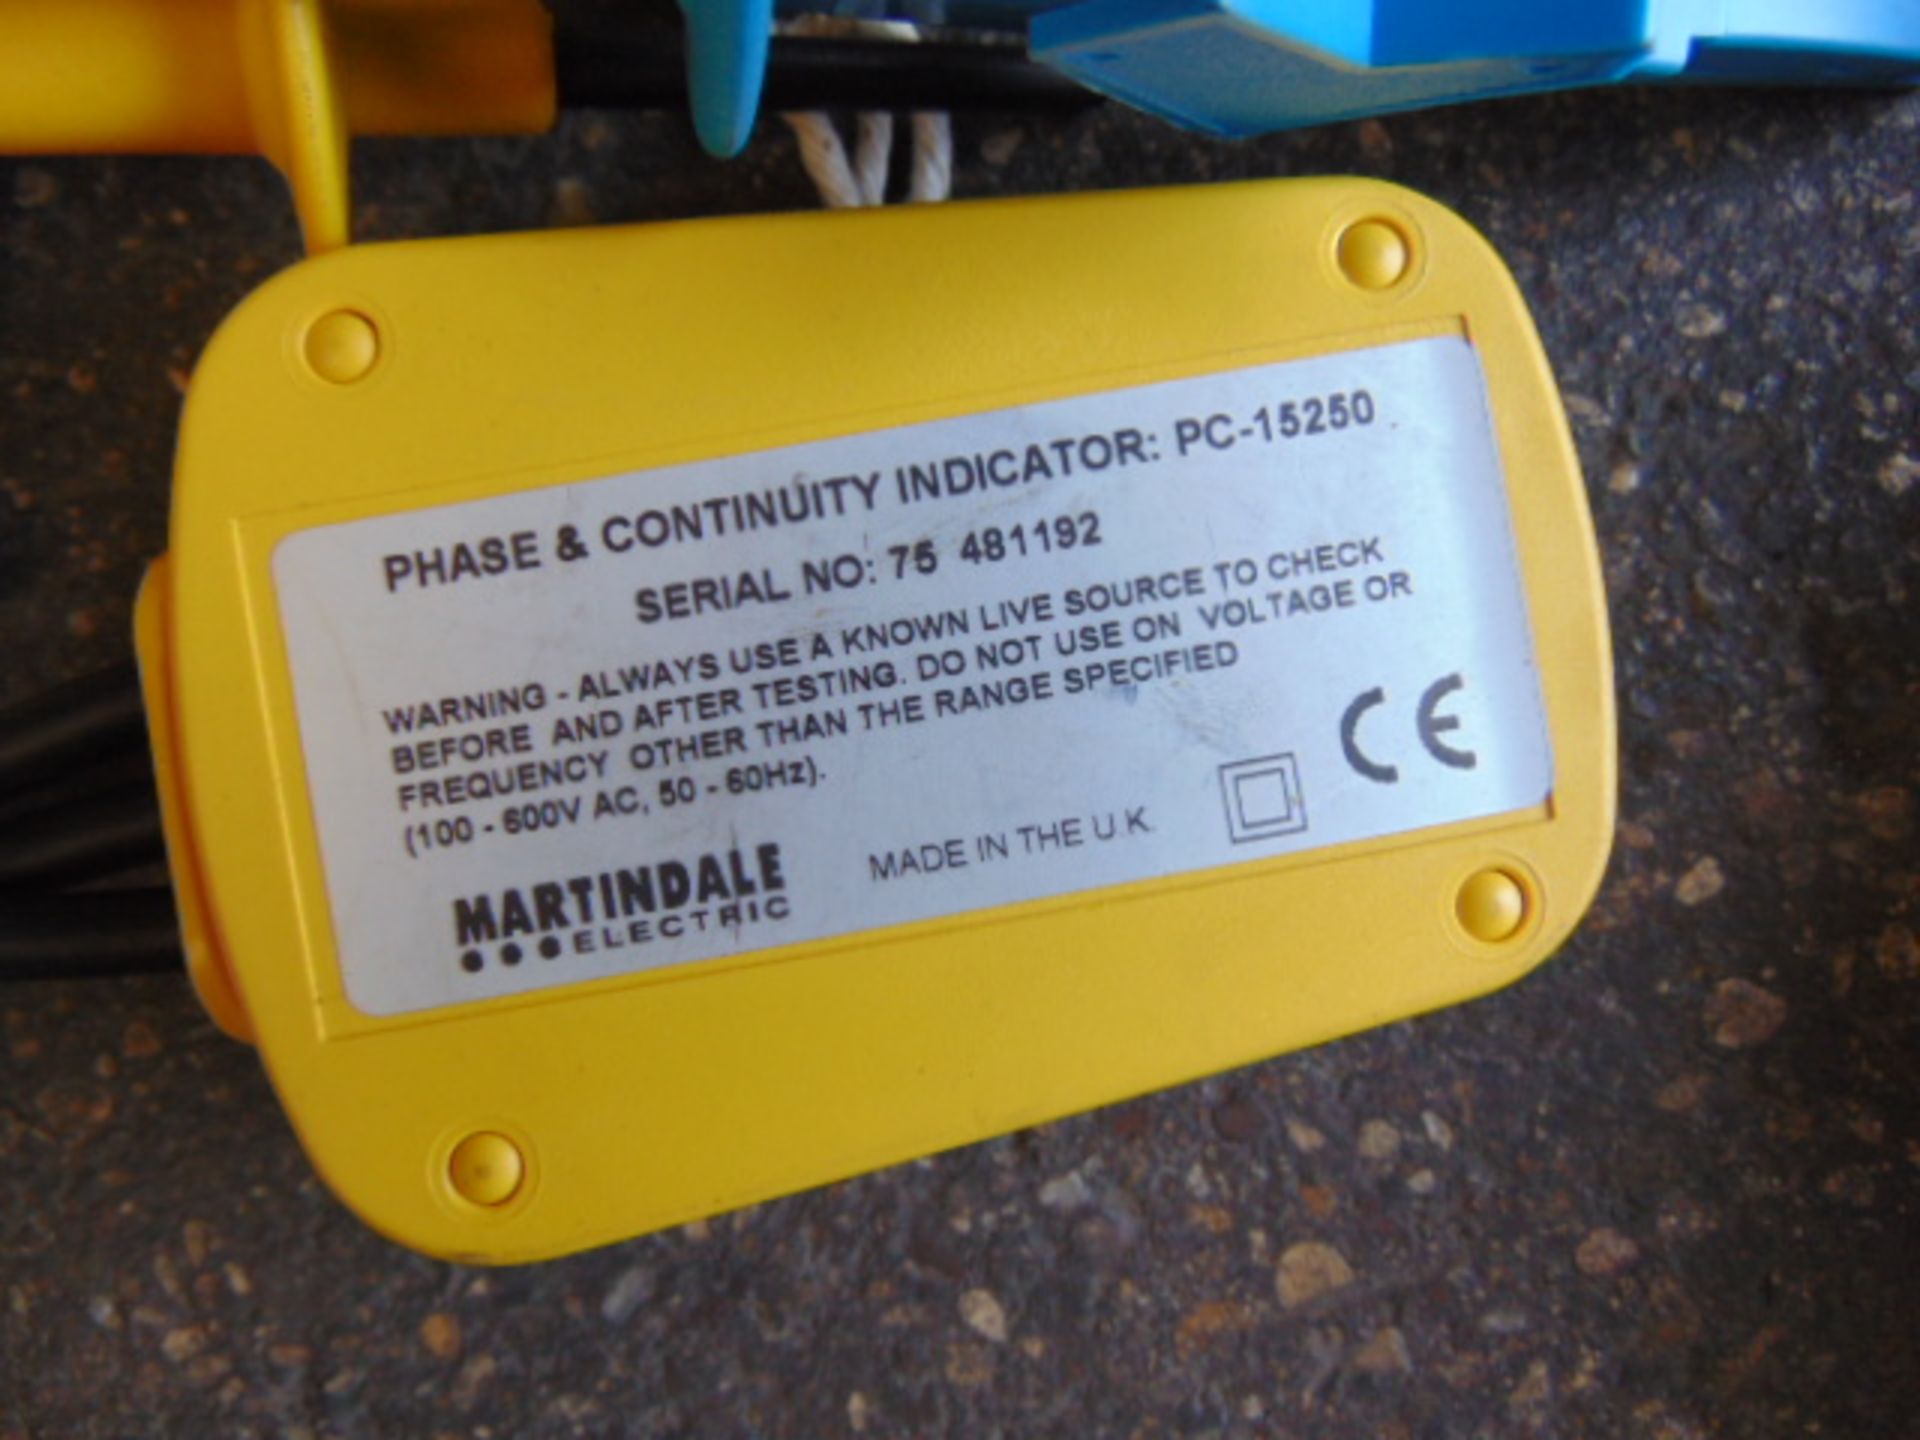 3 x Martindale PC-15250 Phase & Continuity Indicators - Image 4 of 4